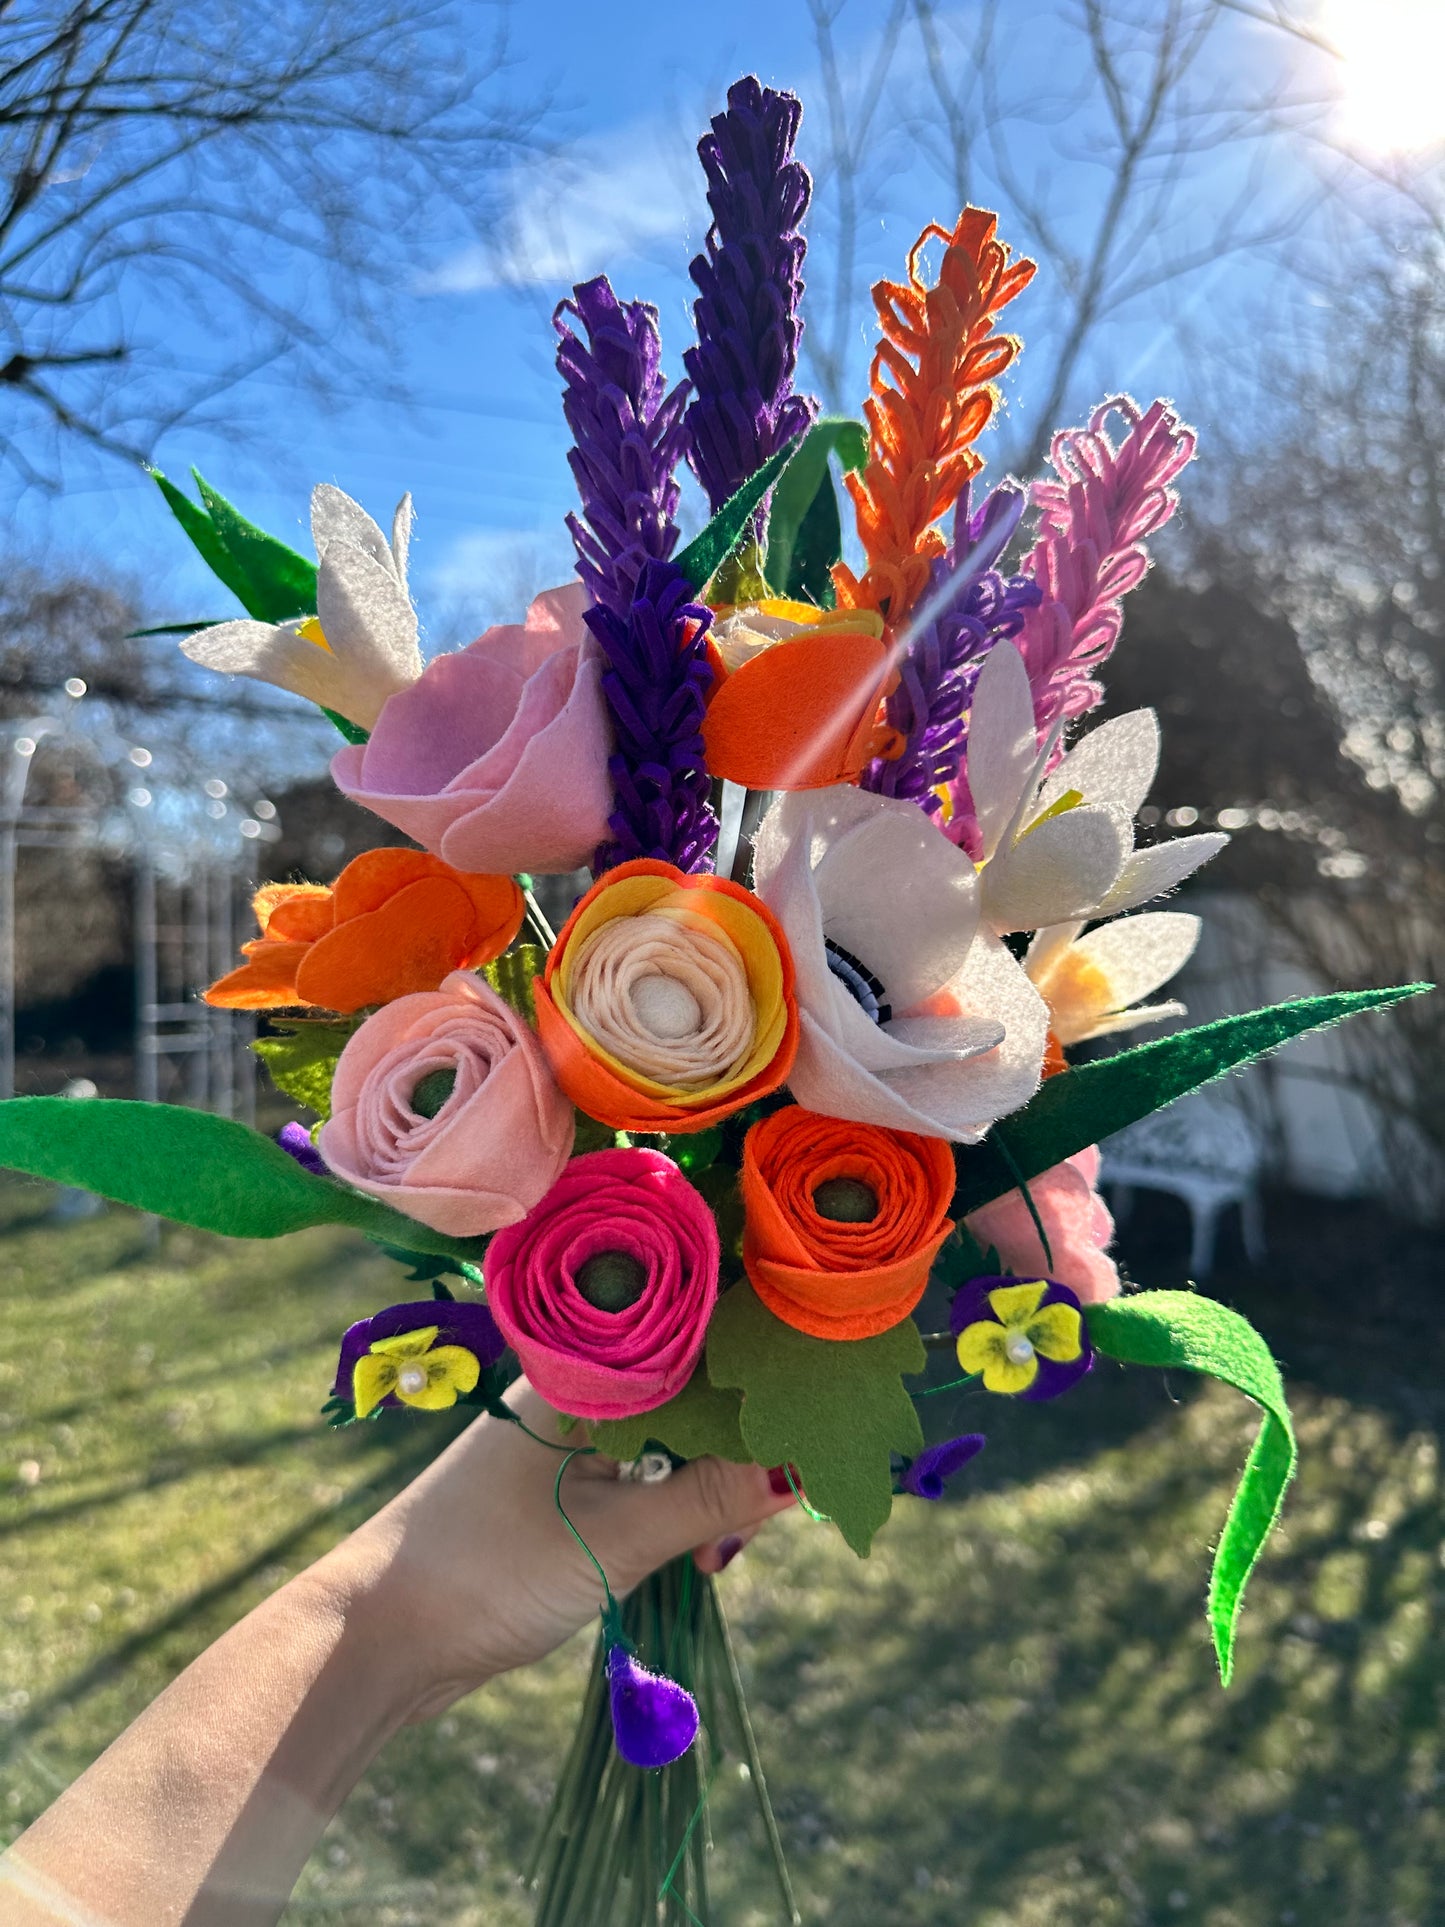 DIY felt flower bouquet kit- Felt flower bouquet for Mother's day, Ranunculus, Roses, Pansies, Anemone, Lilies, Lavenders, pansies etc.